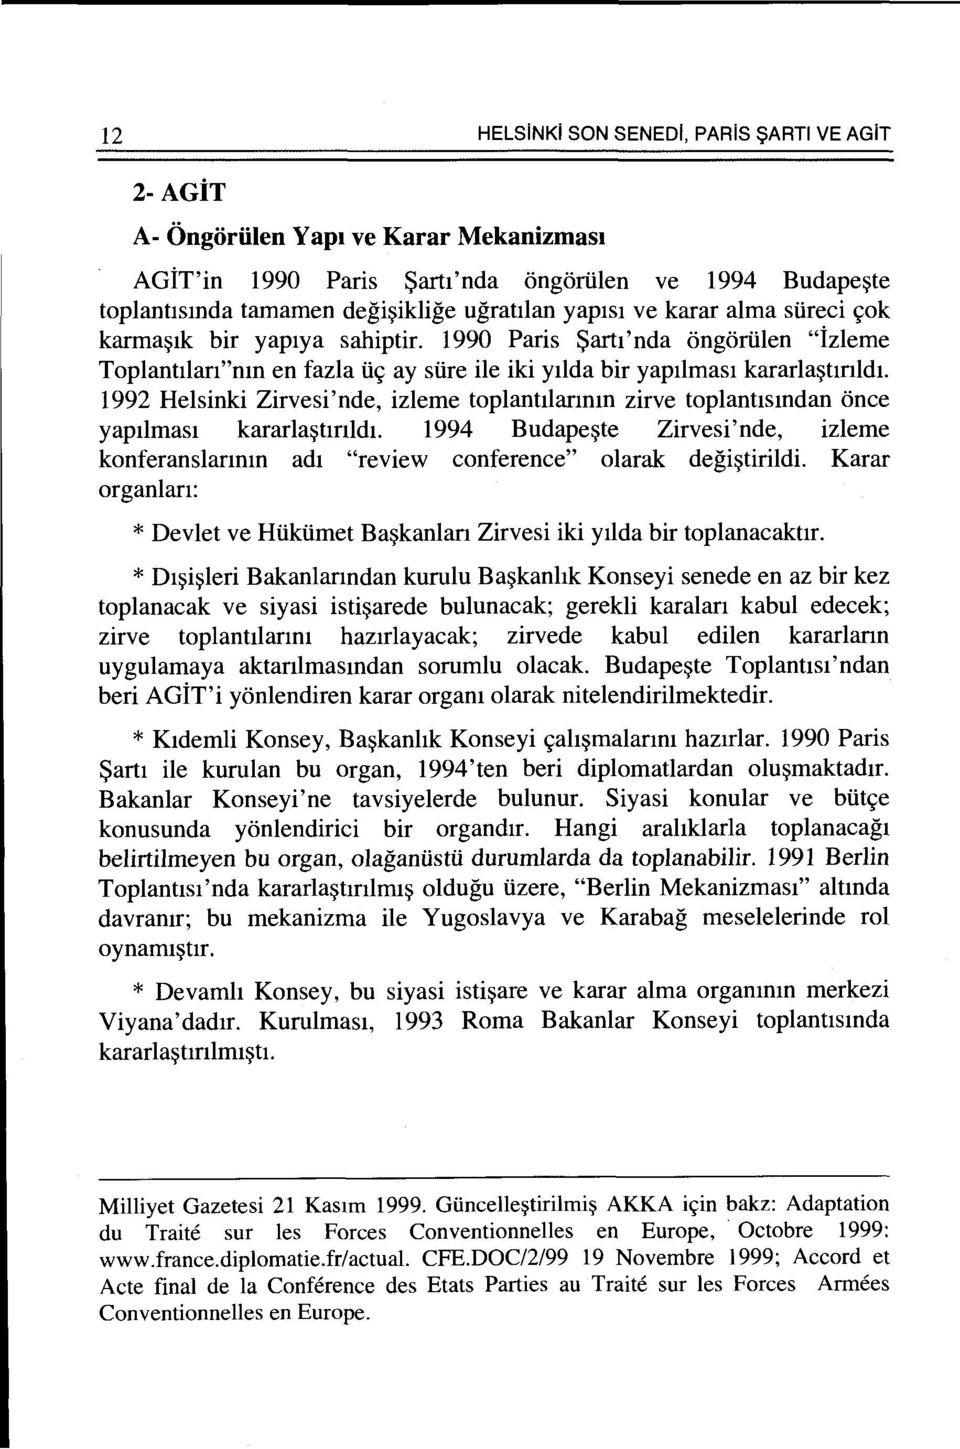 1992 Helsinki Zirvesi'nde, izleme toplantllannm zirve toplantlsmdan once yap1lmas1 kararla~tmld1. 1994 Budape~te Zirvesi'nde, izleme konferanslarmm ad1 "review conference" olarak degi~tirildi.